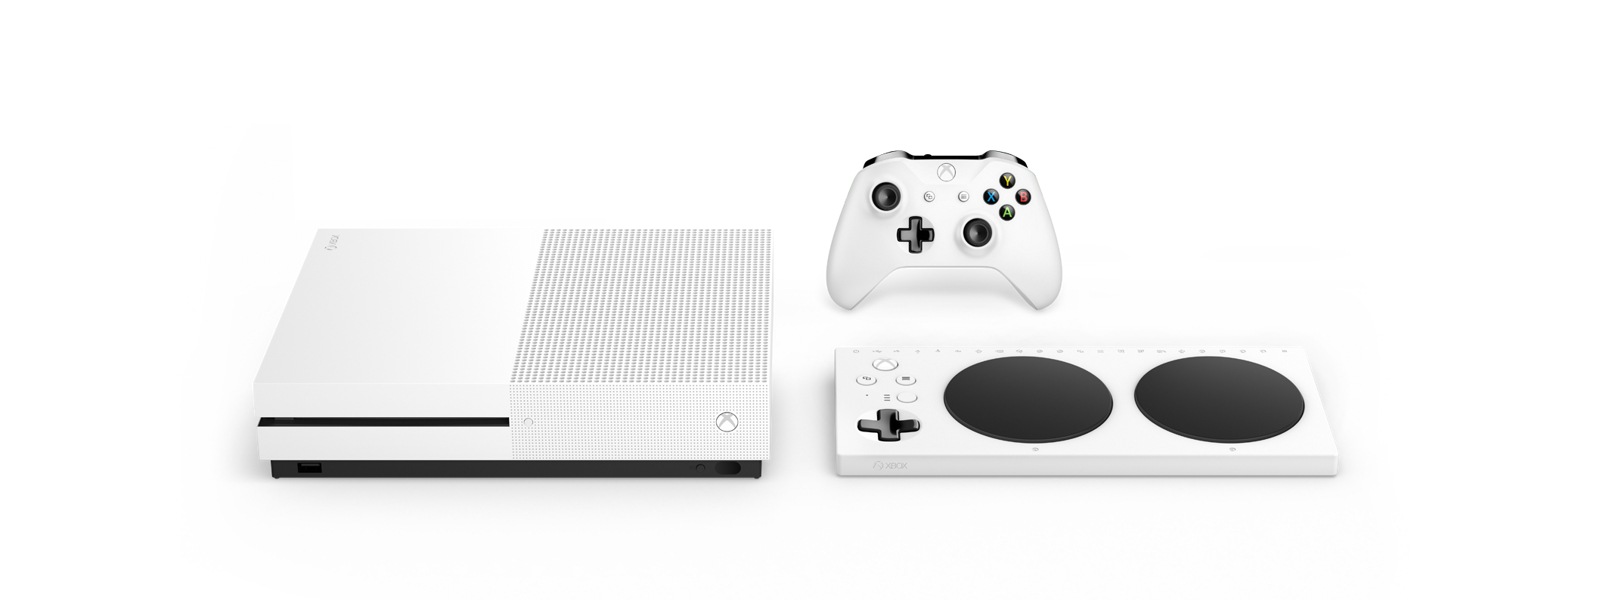 Xbox One, Xbox controller, and Xbox Adaptive Controller